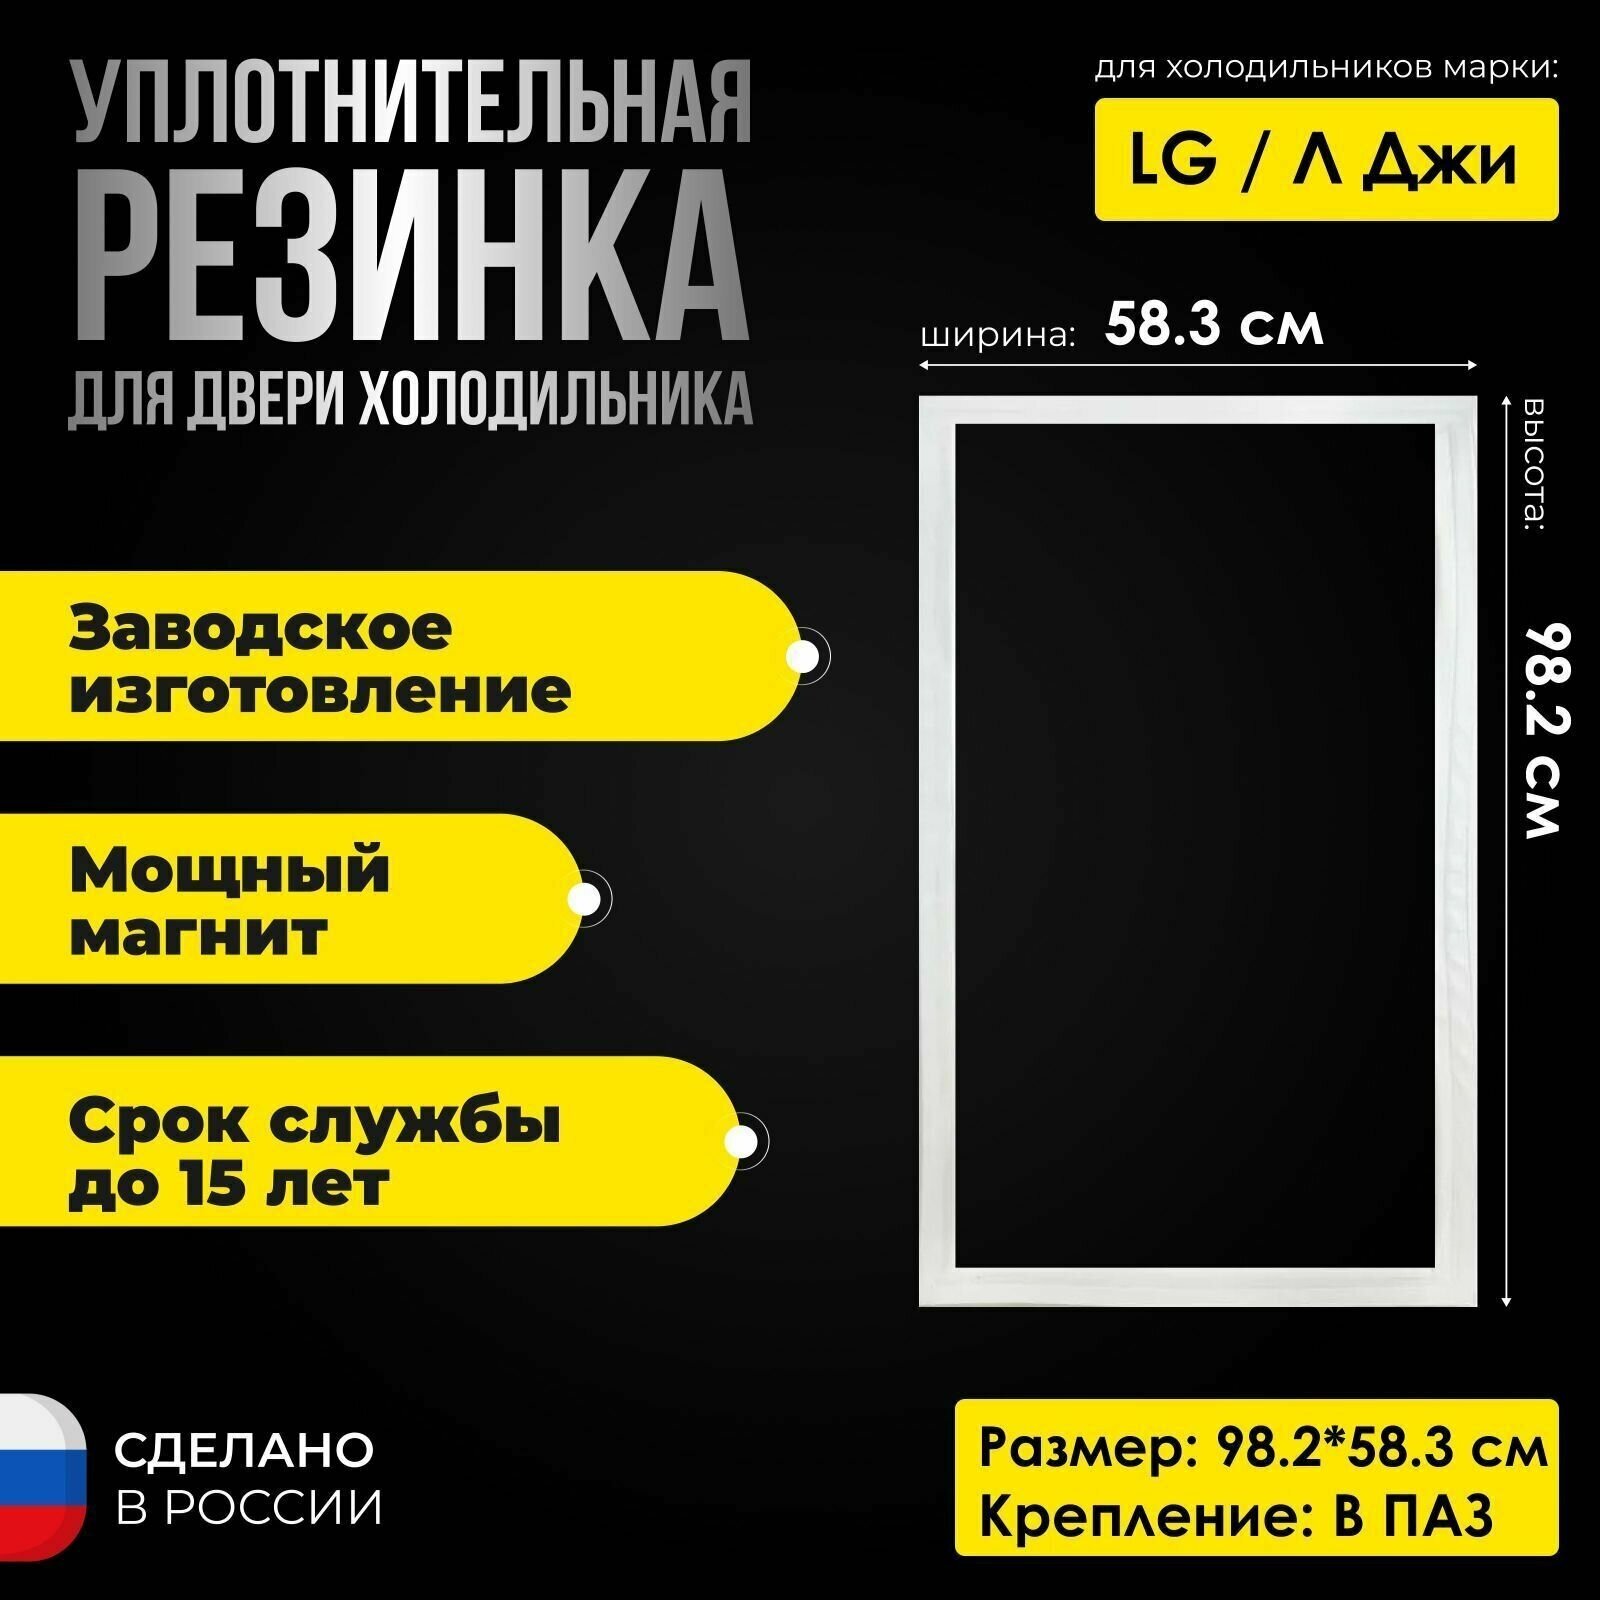 Уплотнитель для двери холодильника LG / ЛДжи размер 98.2х58.3 см ADX74090401/4987JT2001N/ADX36718607/4987JT2001R/ADX74090410 на холодильную камеру